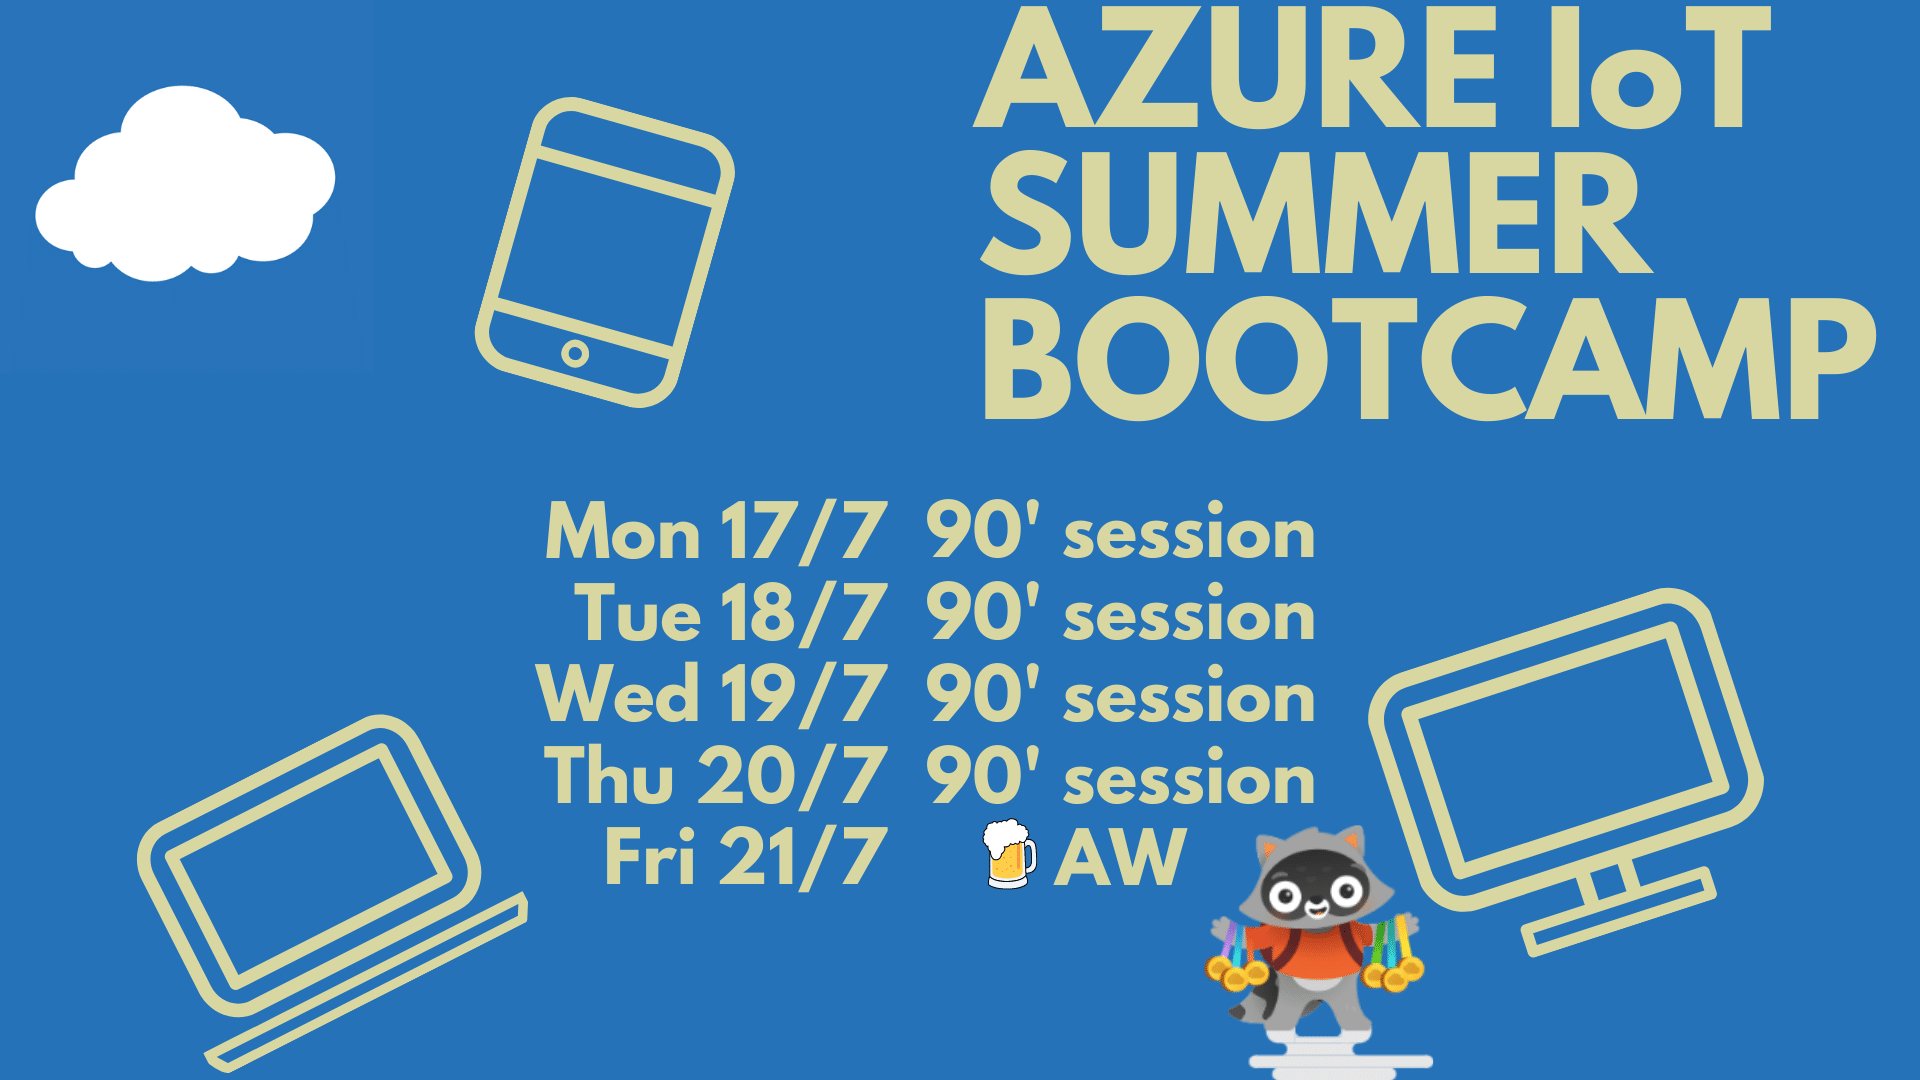 Azure IoT Summer Bootcamp